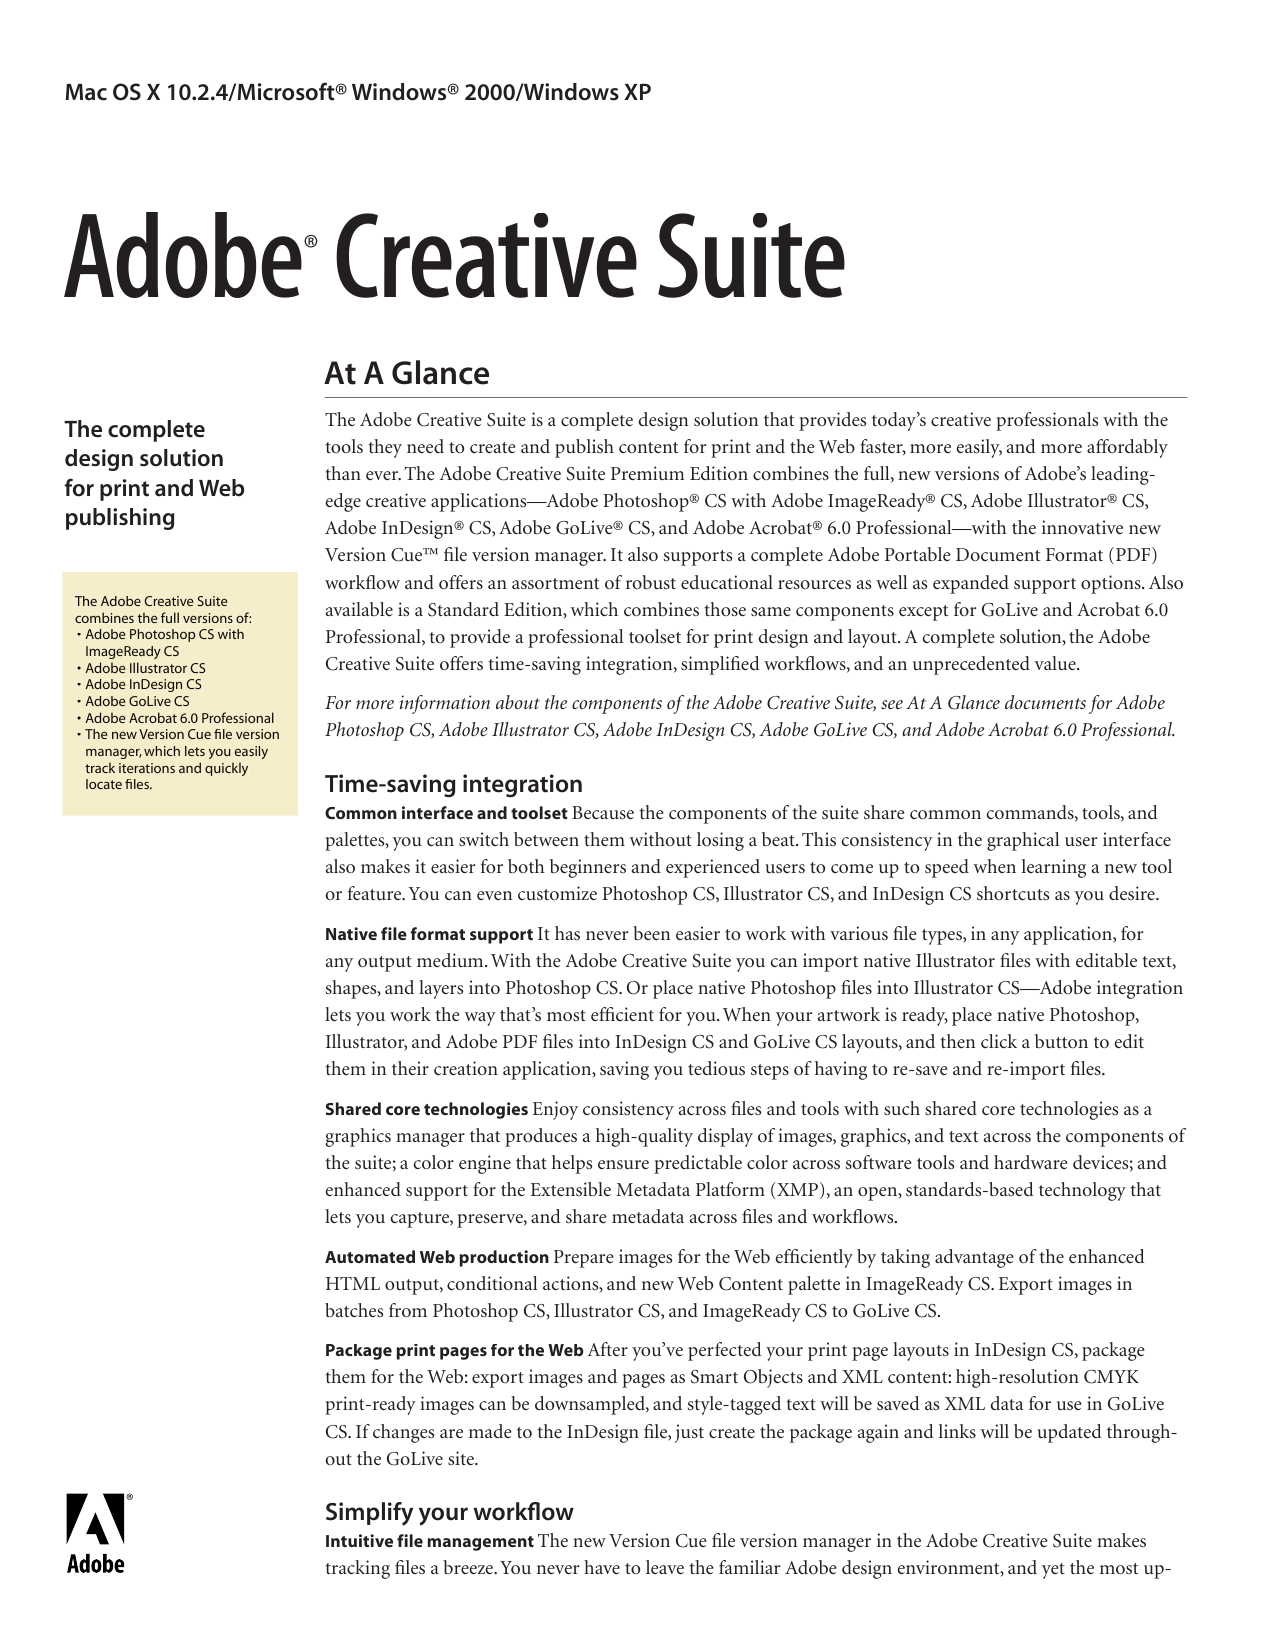 adobe creative suite 6 tutorials beginners